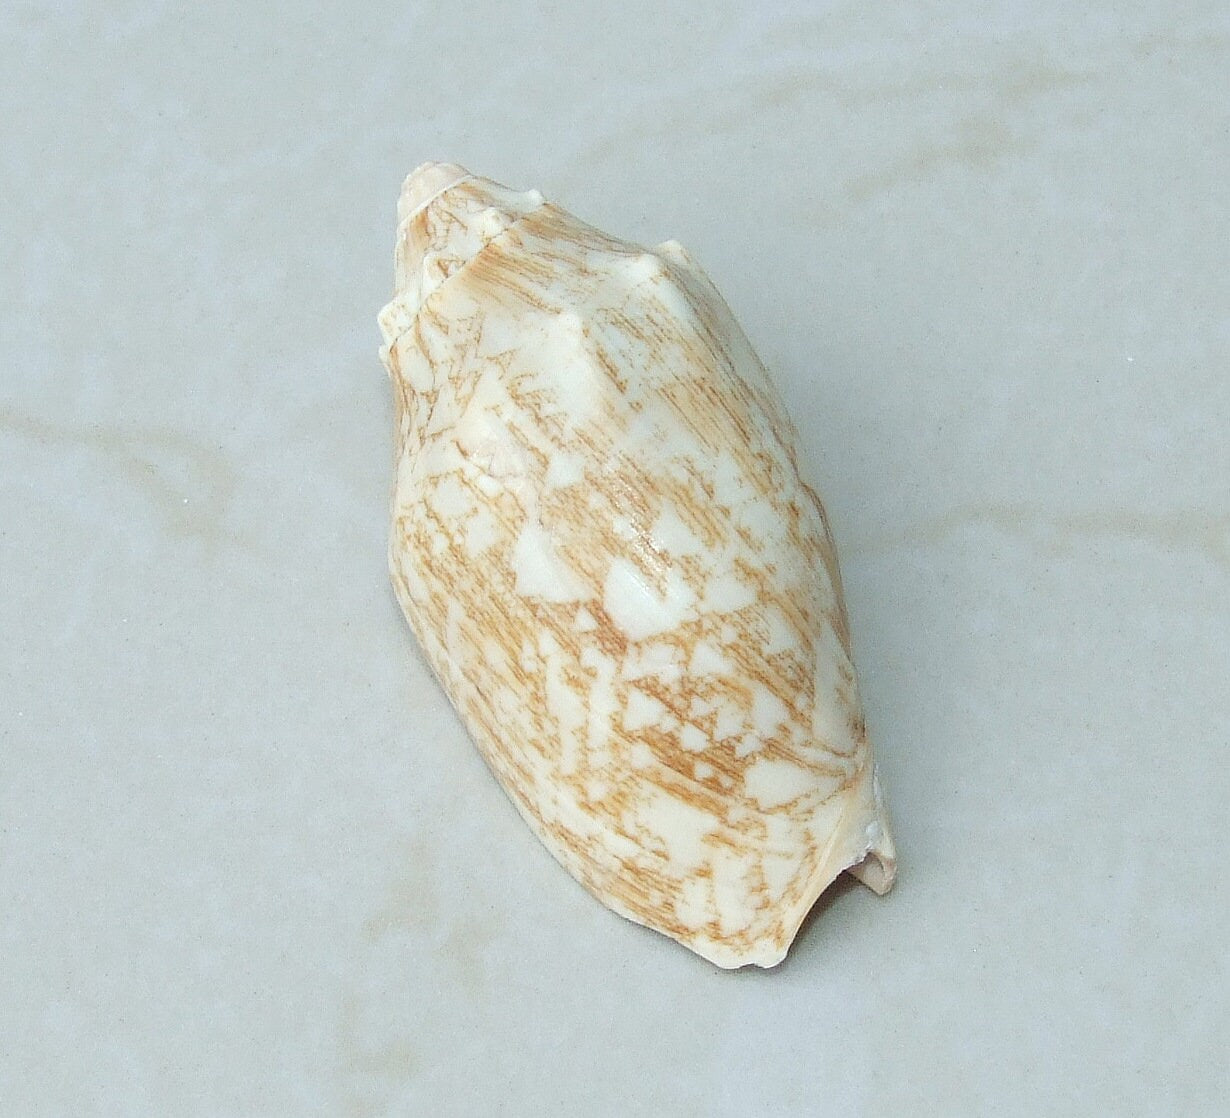 Large Natural Strombus Conch Sea Shell, Spiral Shell, Seashell, Shell, Beach Decor, Ocean Shell - 60-65mm, 2 Shells - 126-08